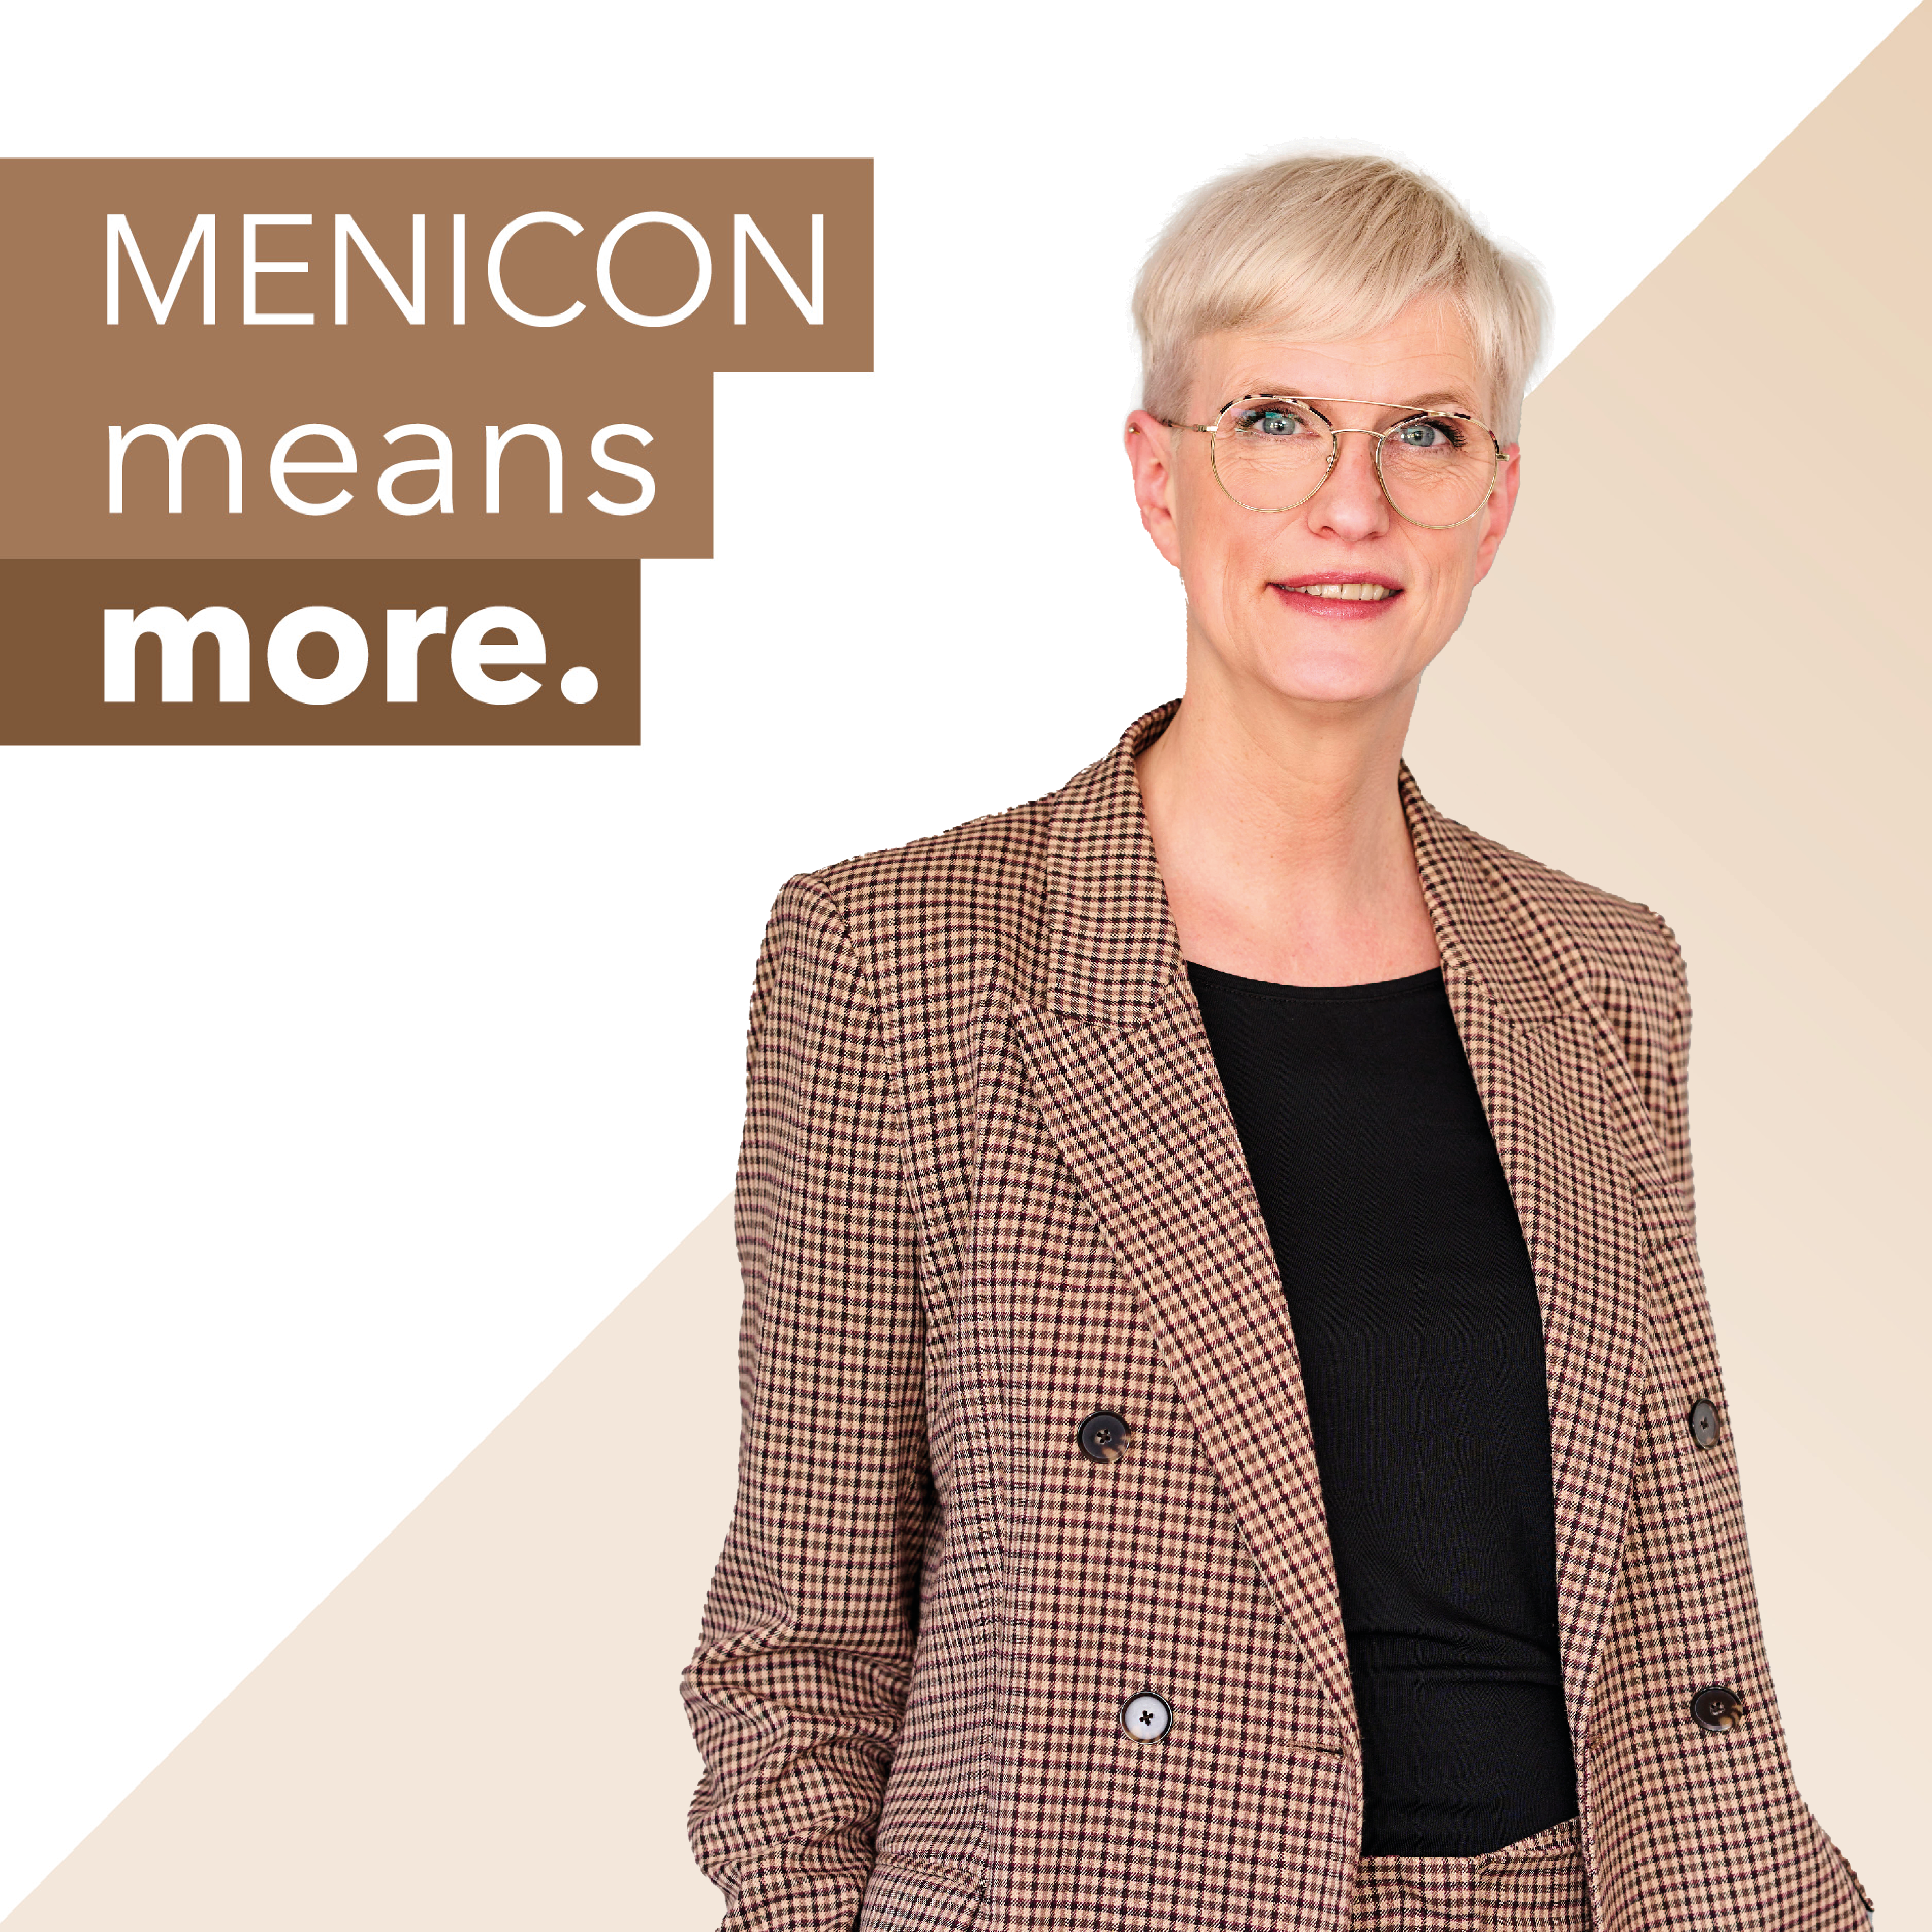 MENICON means more: Kerstin Meckel